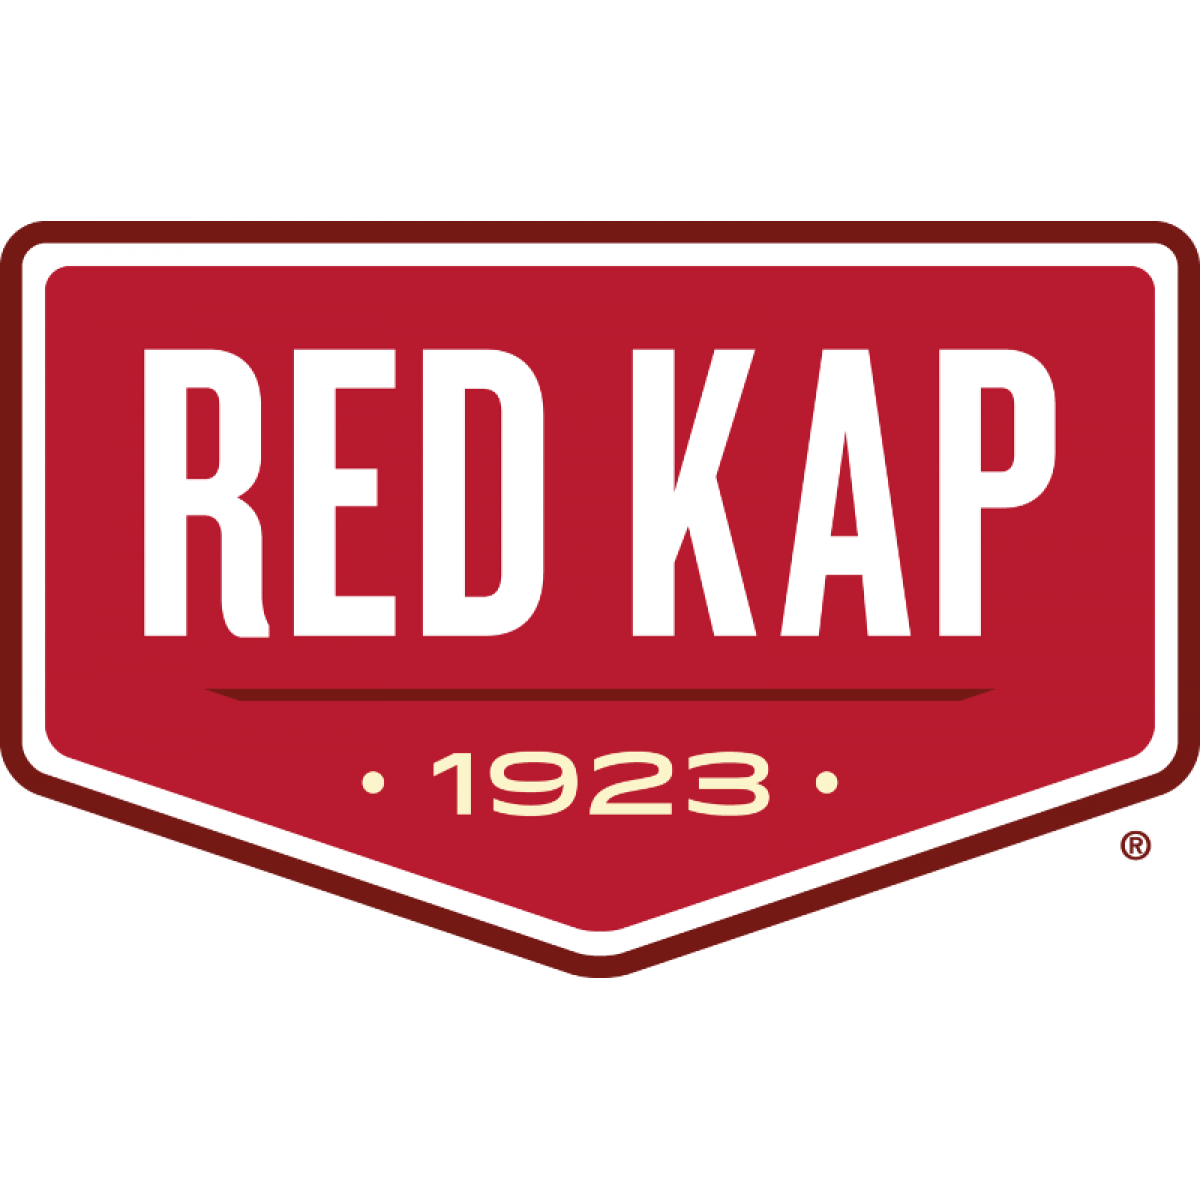 NEW Red Kap Men Pants 100% Cotton Work Uniform Green PC20SG Irregular